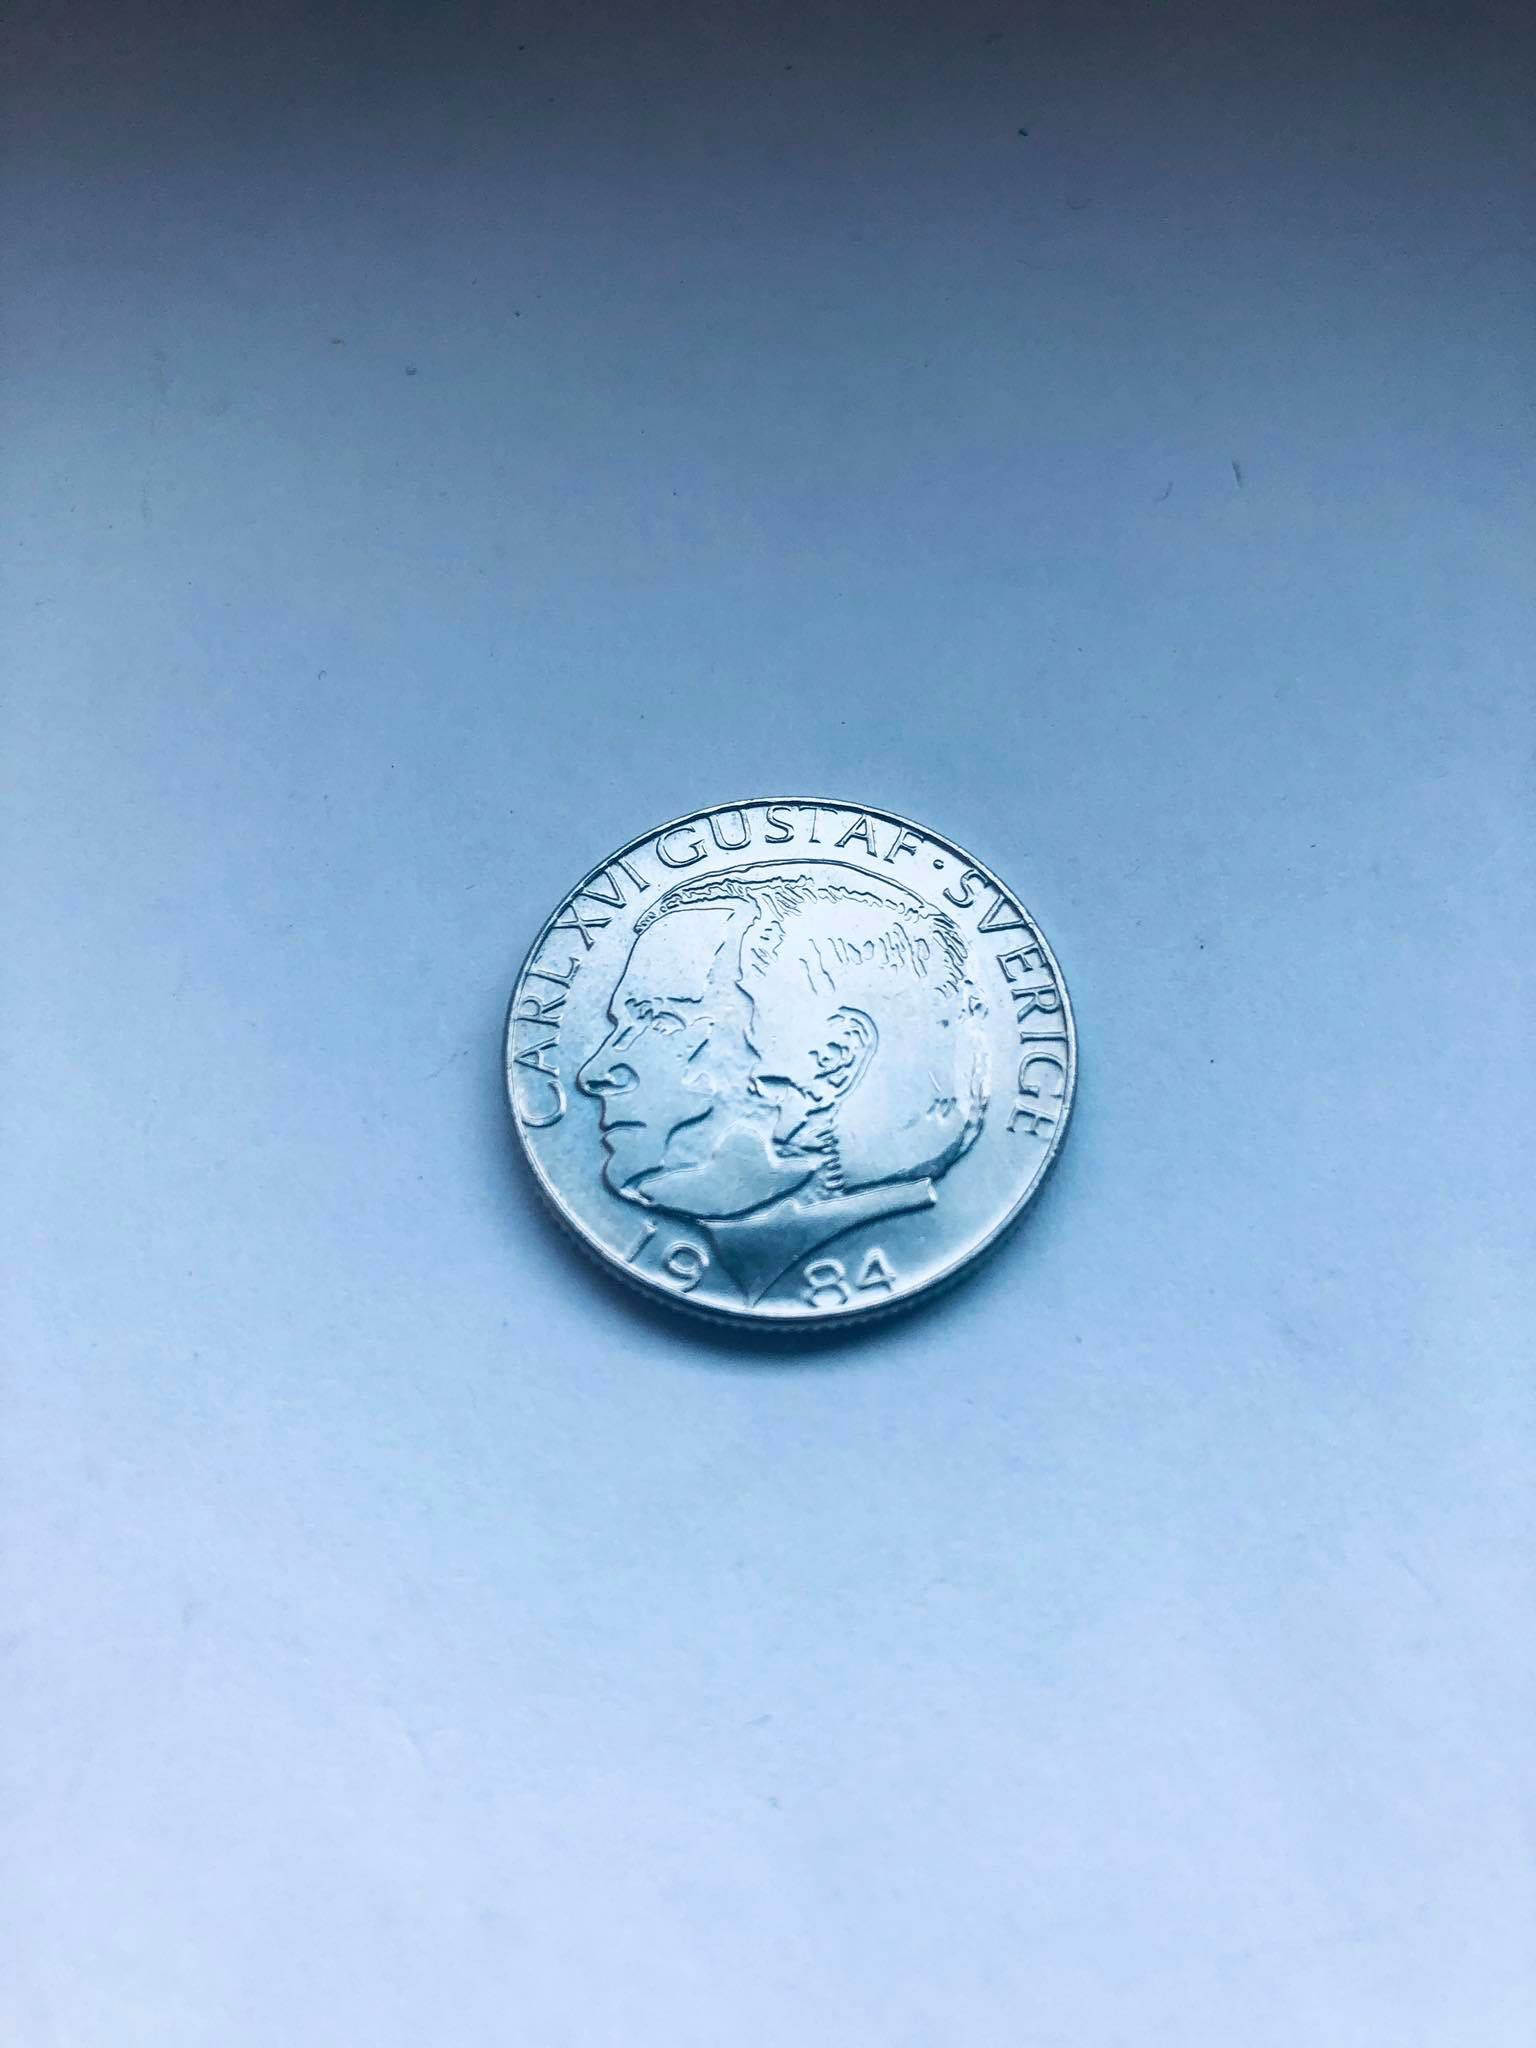 Moneta 1 Korona Szwecka 1984r Król Karol XVI Gustaw